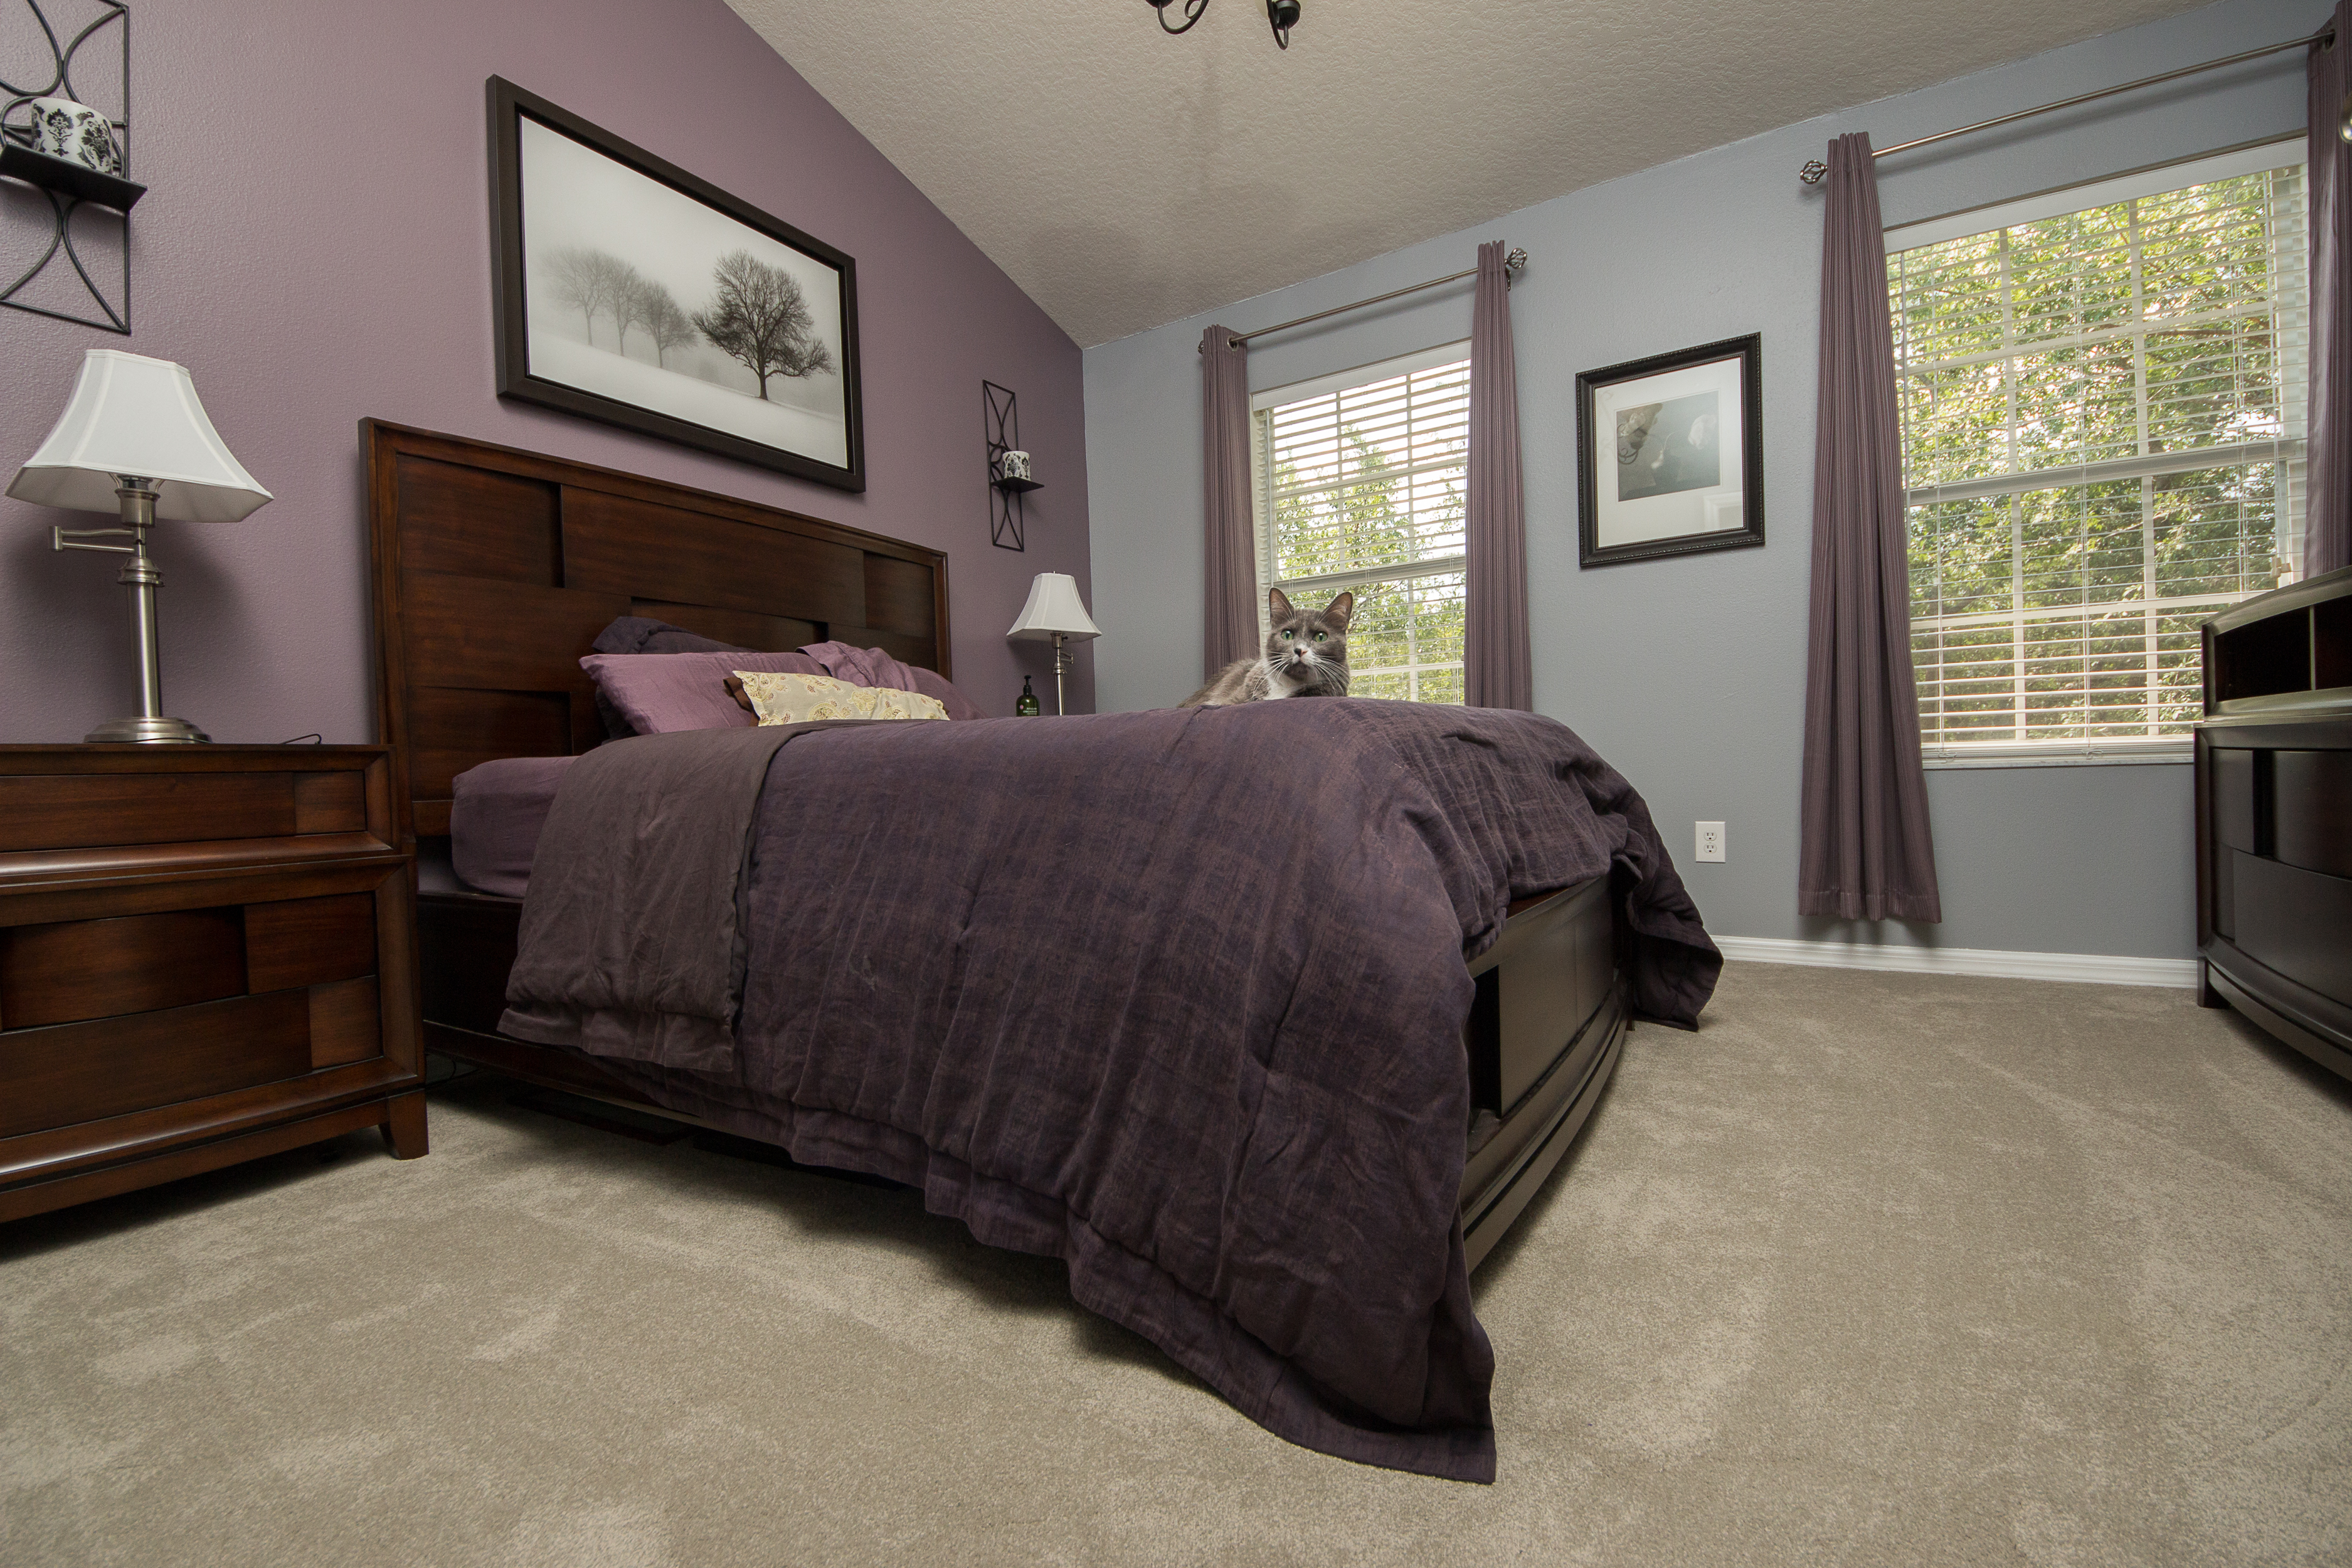 PVC Vinyl & Gray Carpet flooring in furnished master bedroom